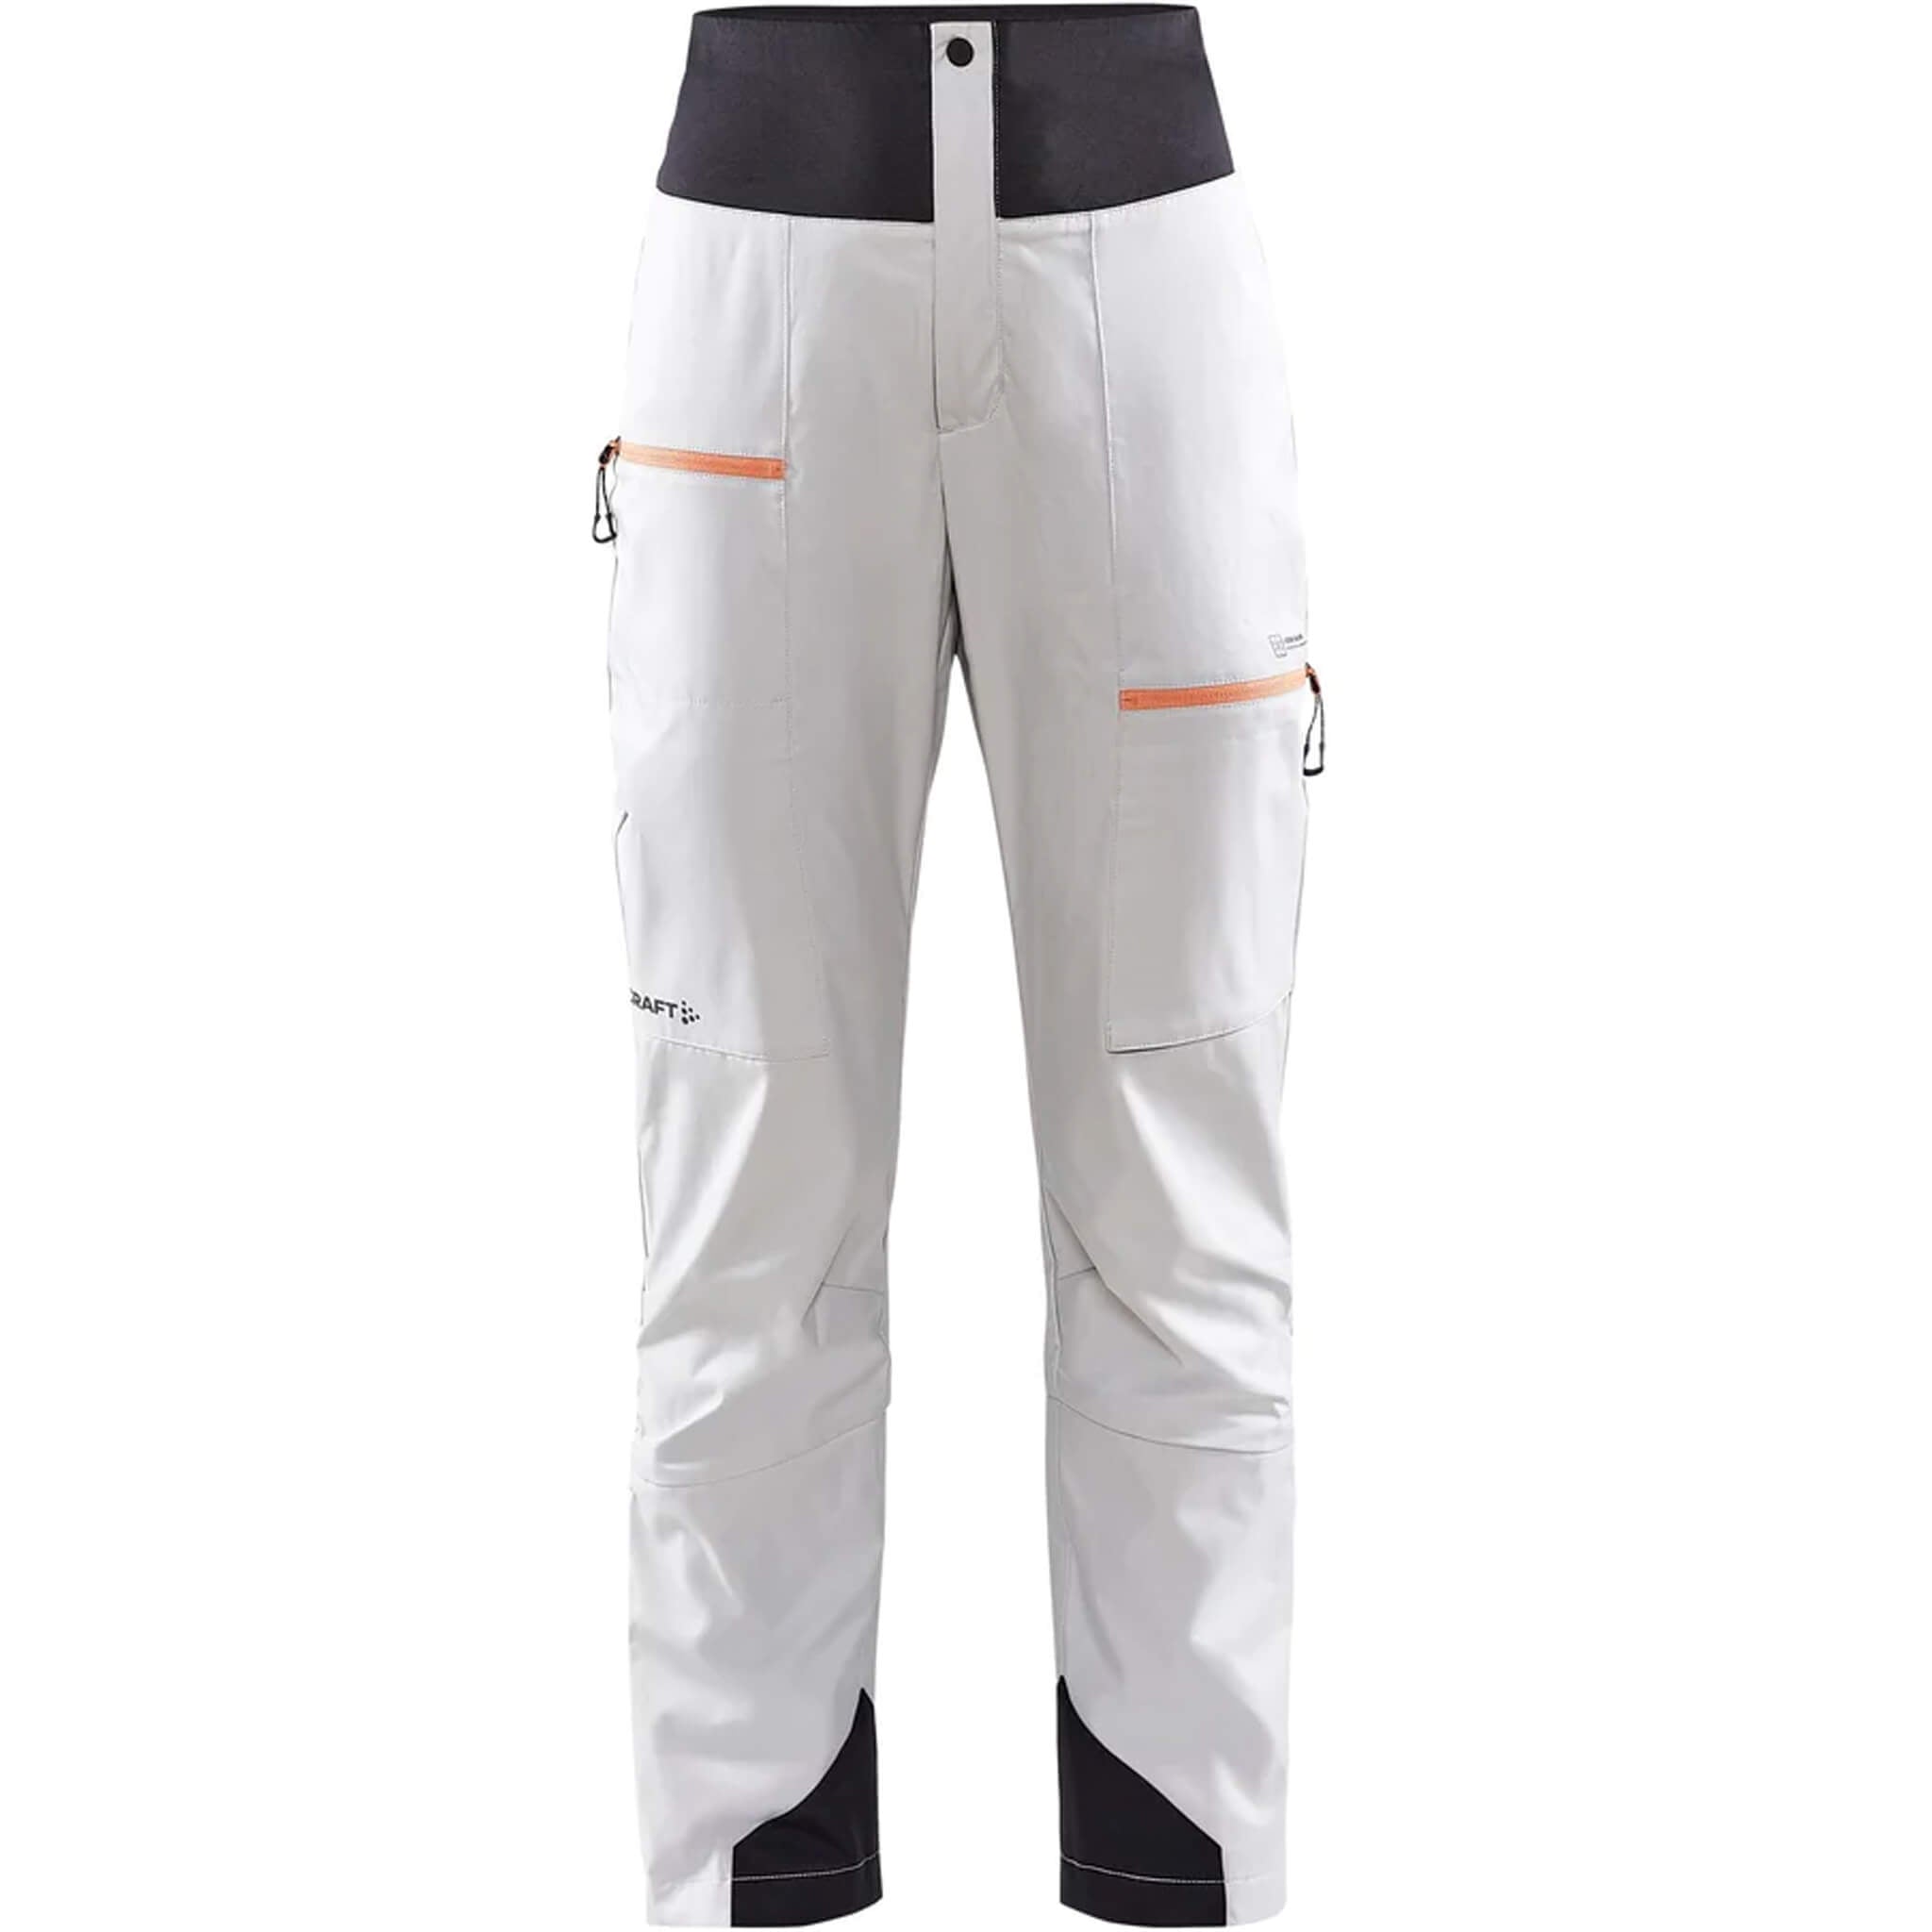 Pantalon Esqui Joluvi Impact Hot SR 225214.013 Marino - Deportes